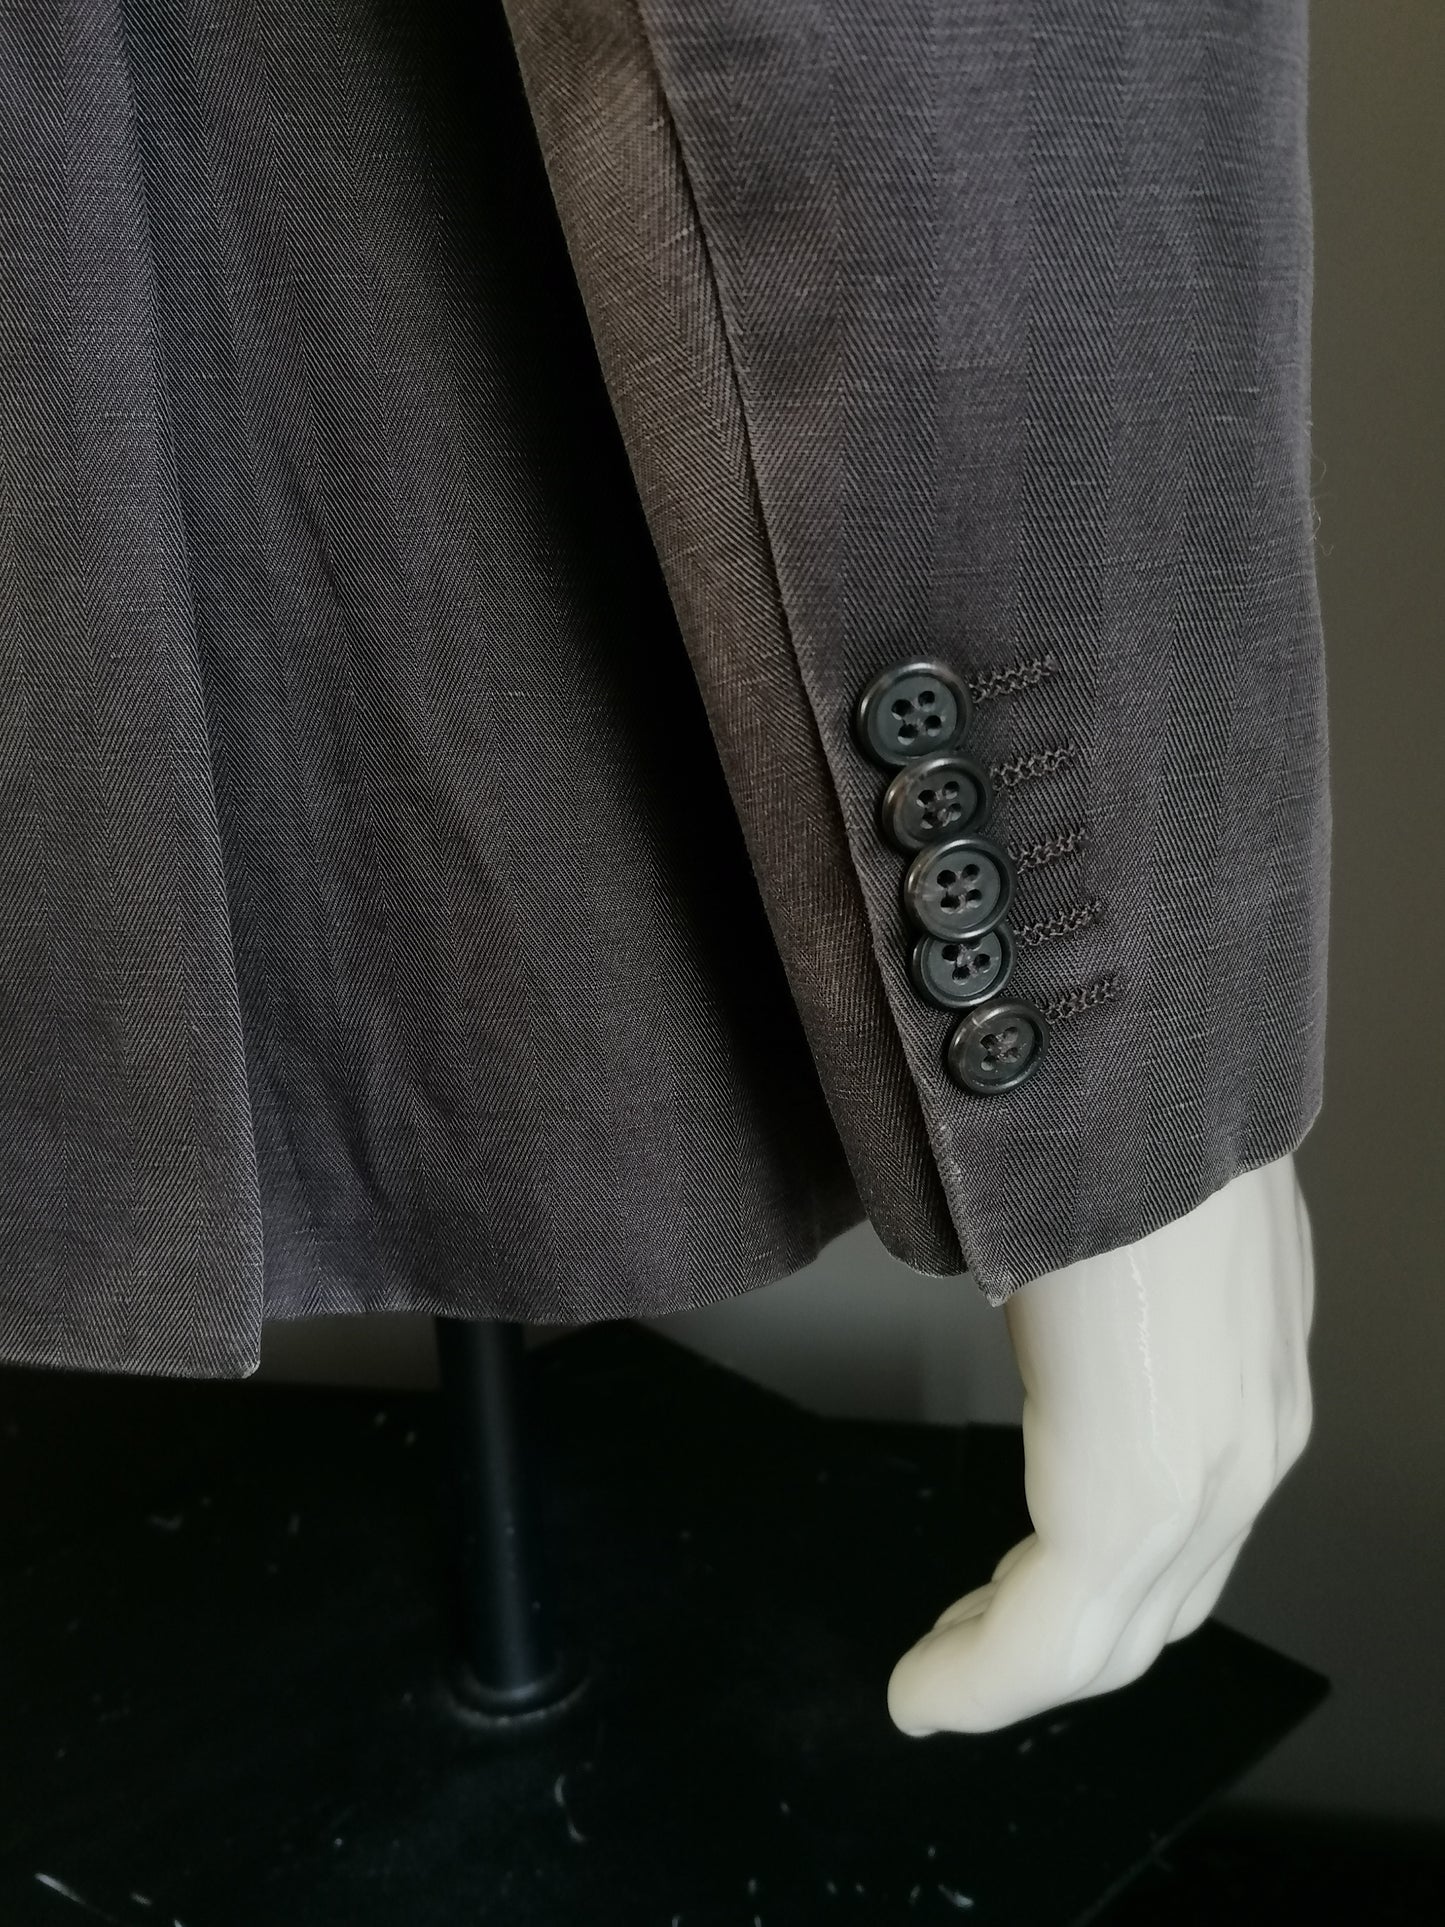 Soci3ty jacket. Dark brown herringbone motif. Size 52 / L. "88 or 100"